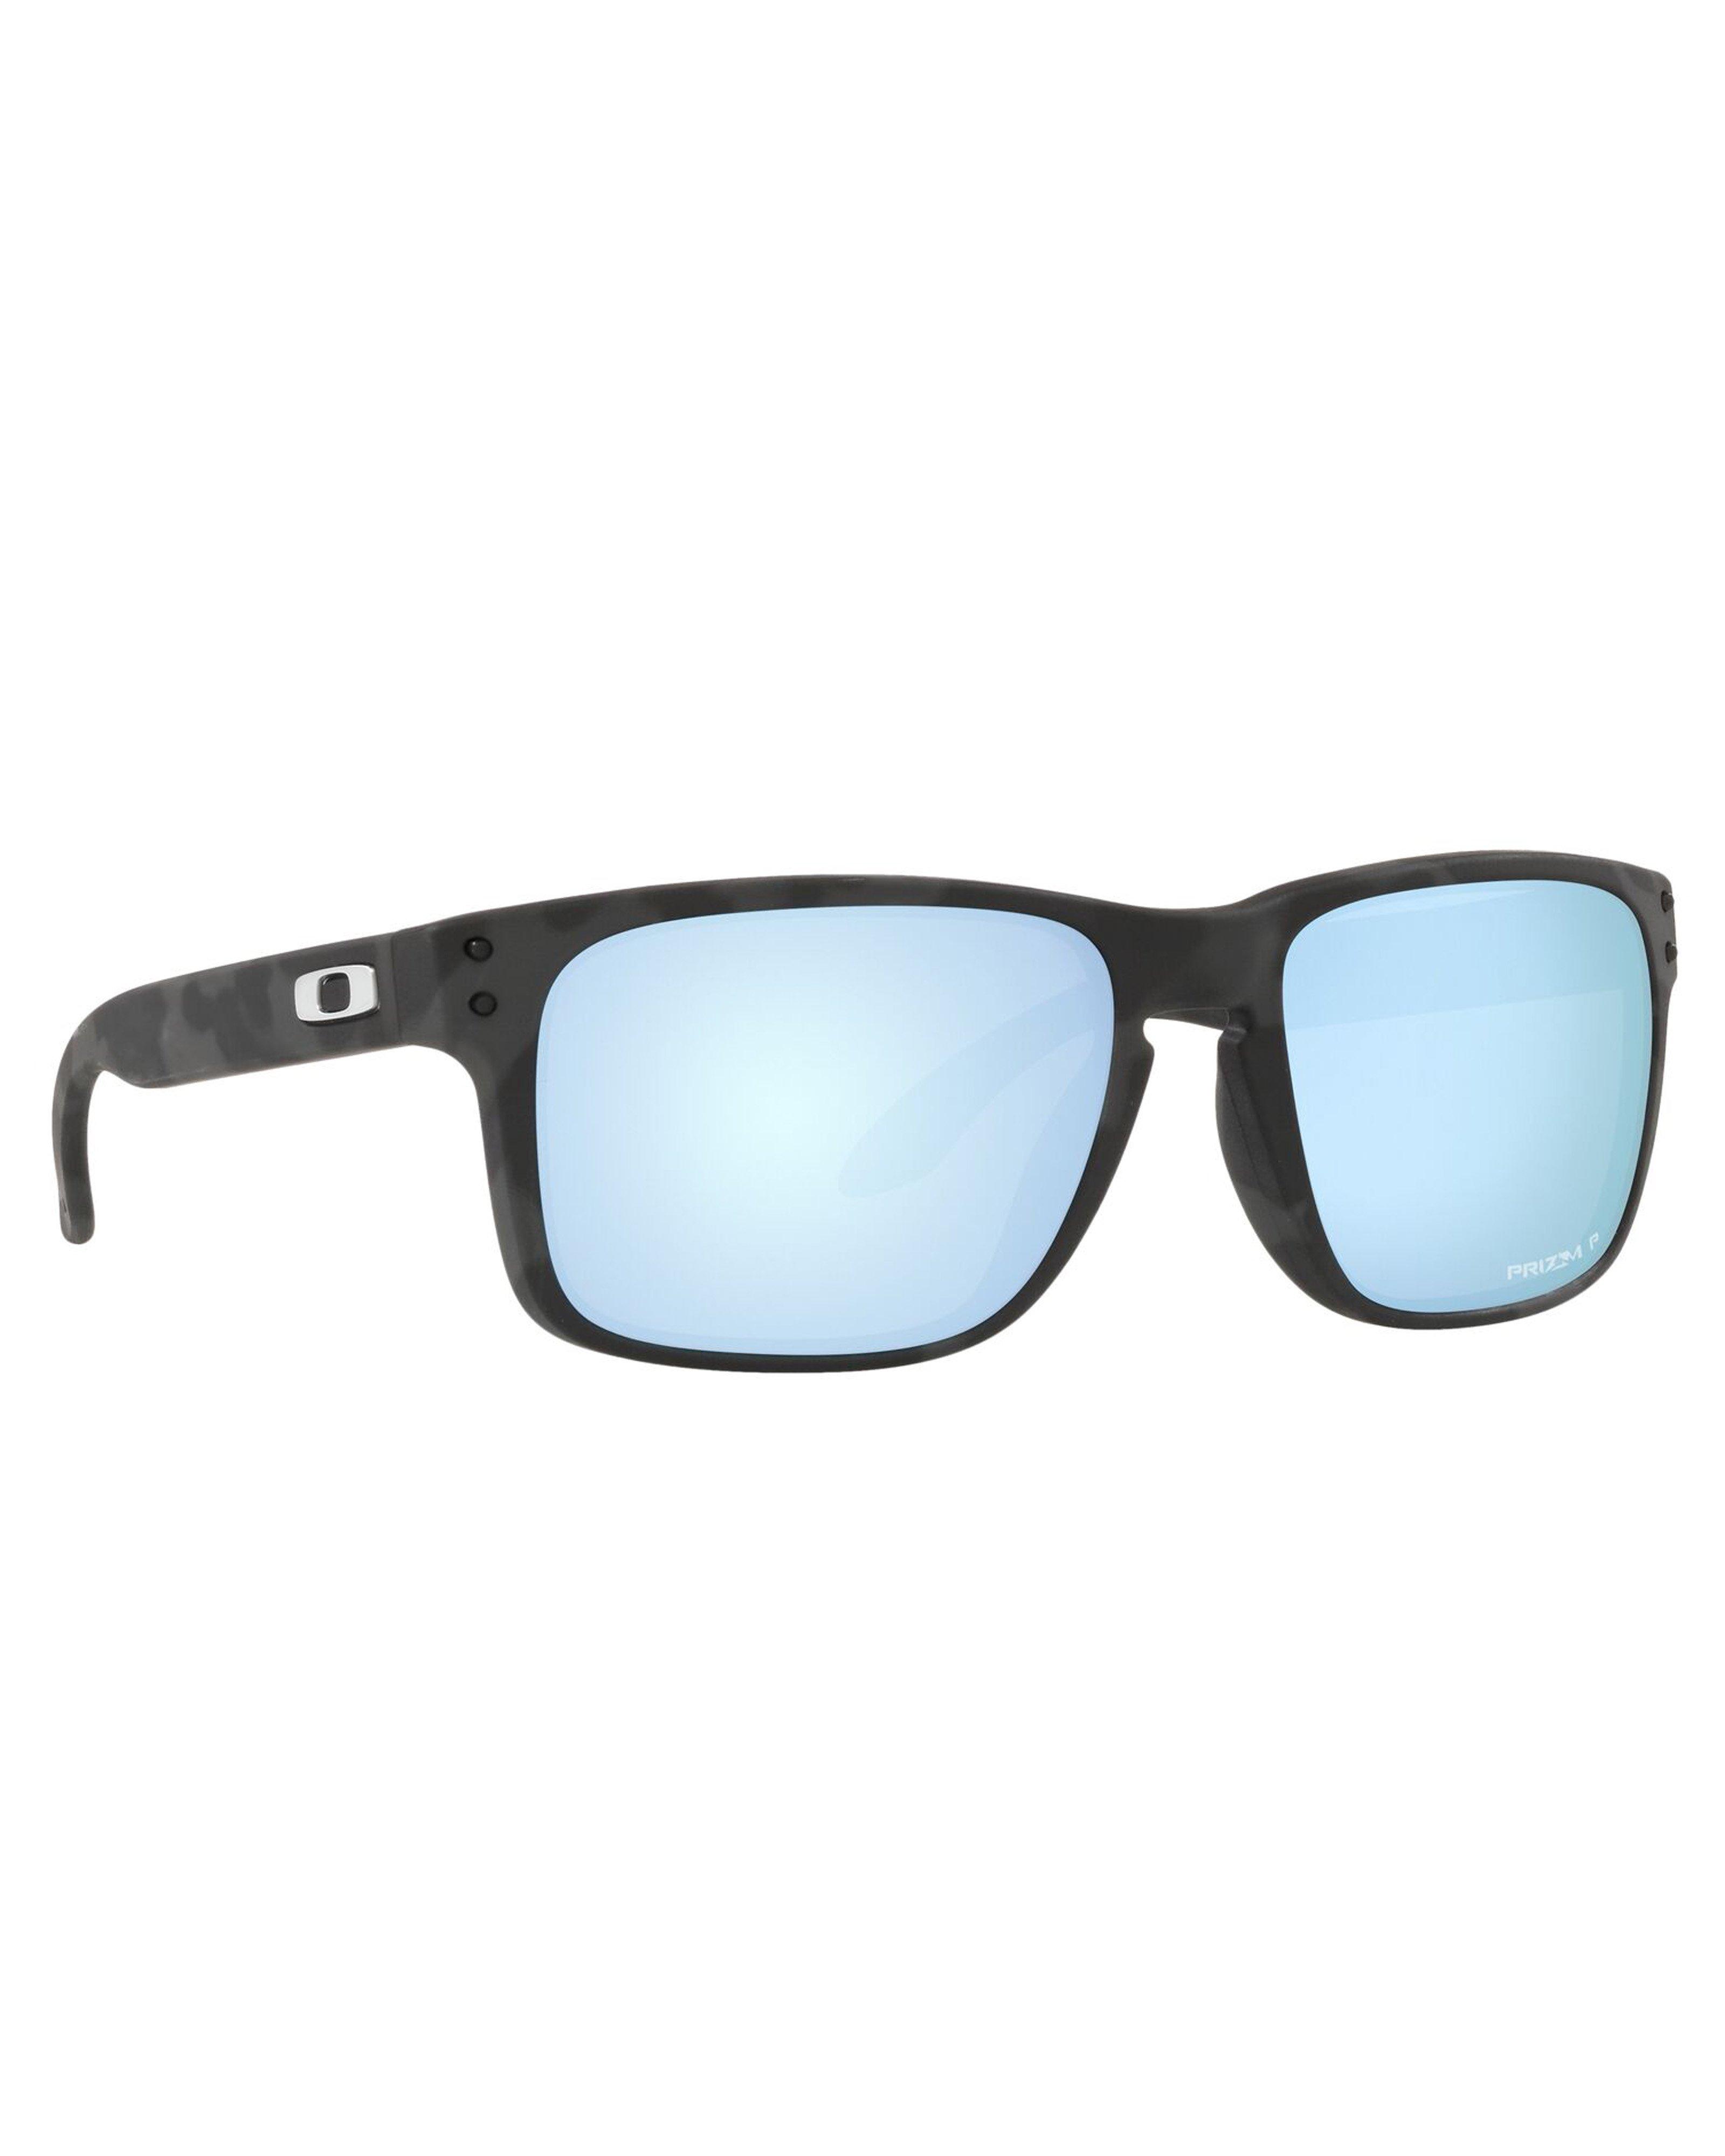 Oakley Holbrook Sunglasses | Cape Union Mart